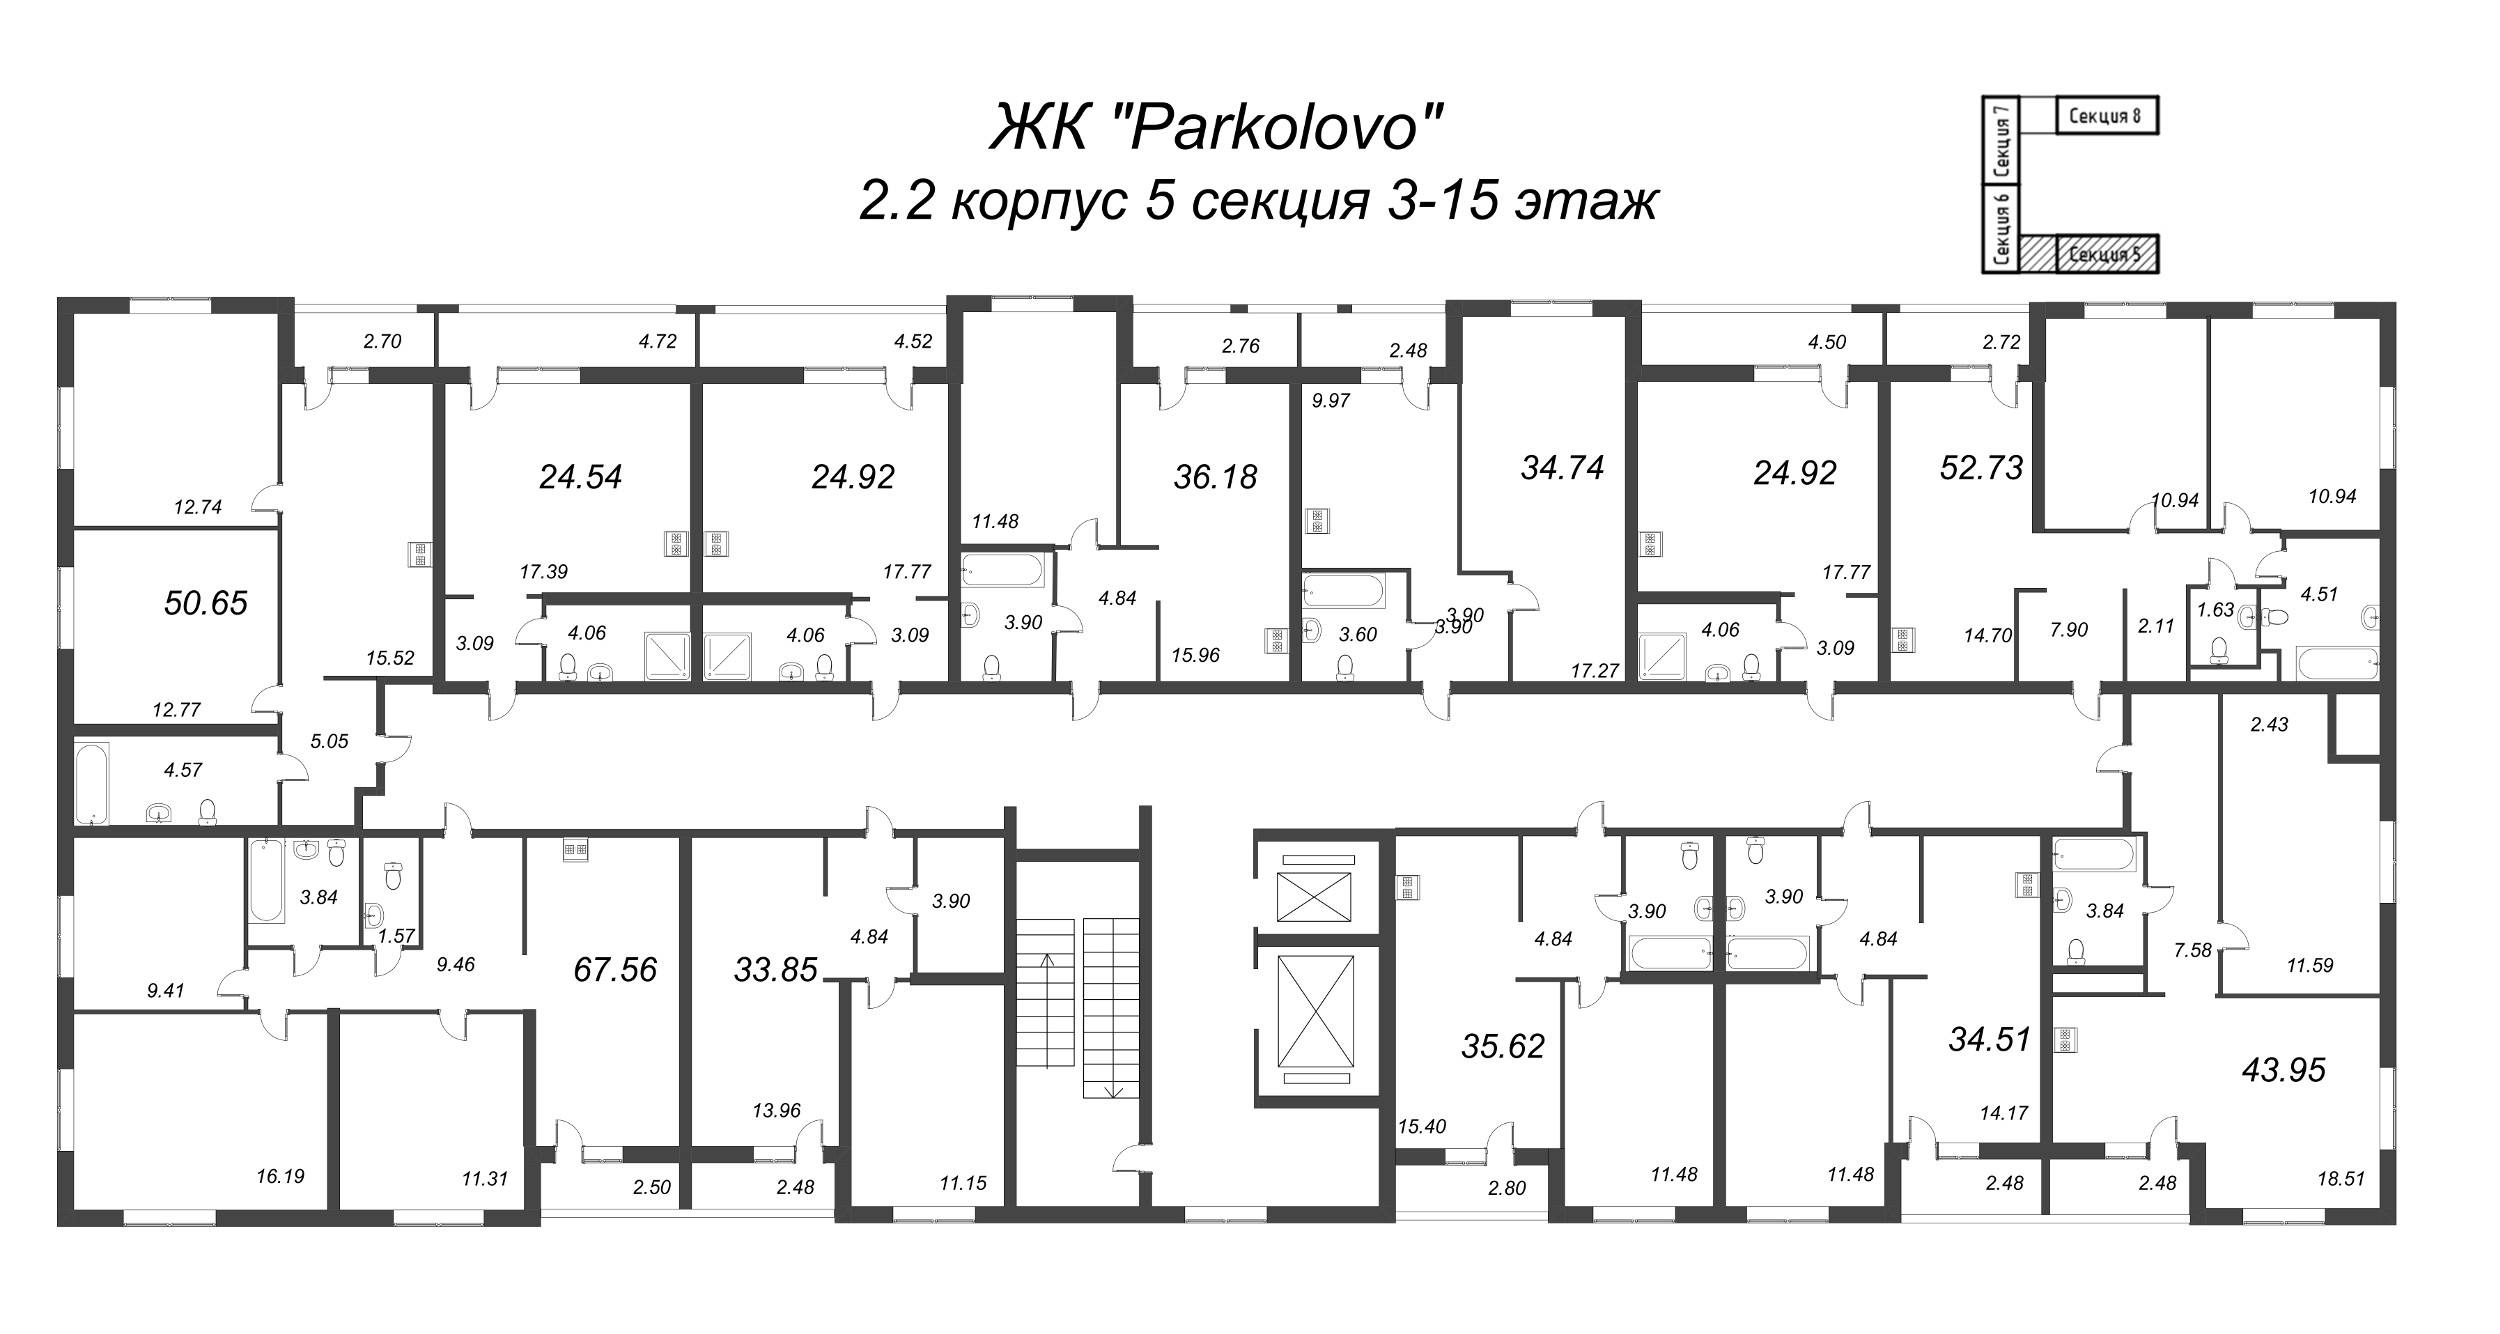 2-комнатная (Евро) квартира, 42.92 м² - планировка этажа